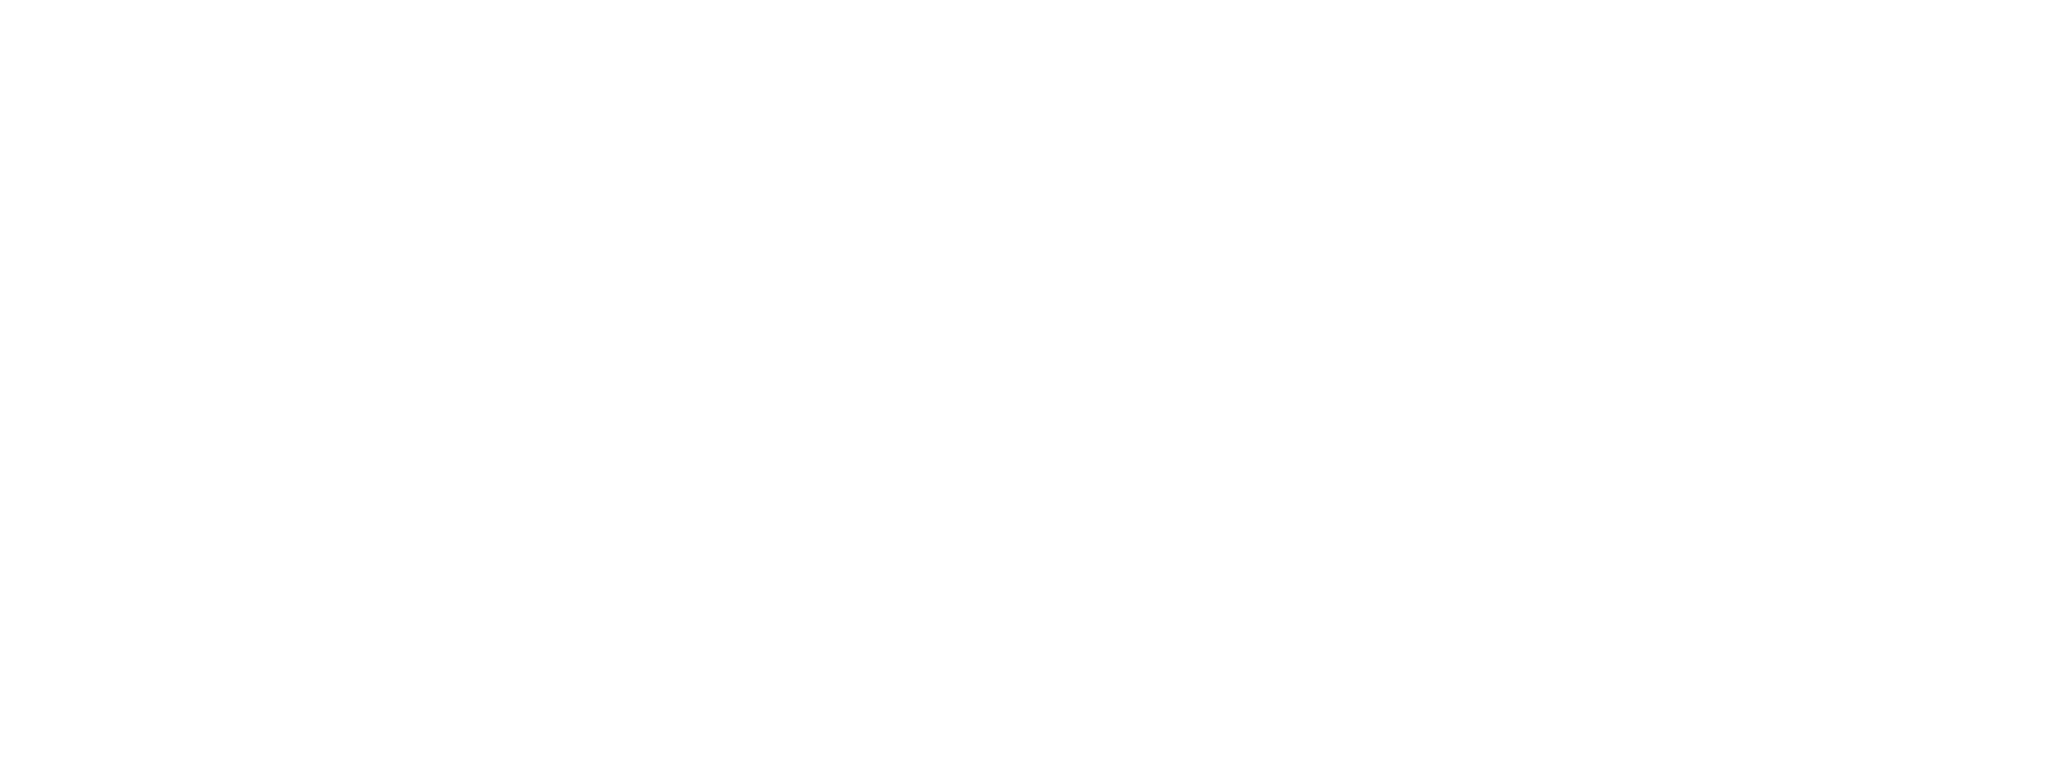 SAN JUDAS TADEO ASERRADORA